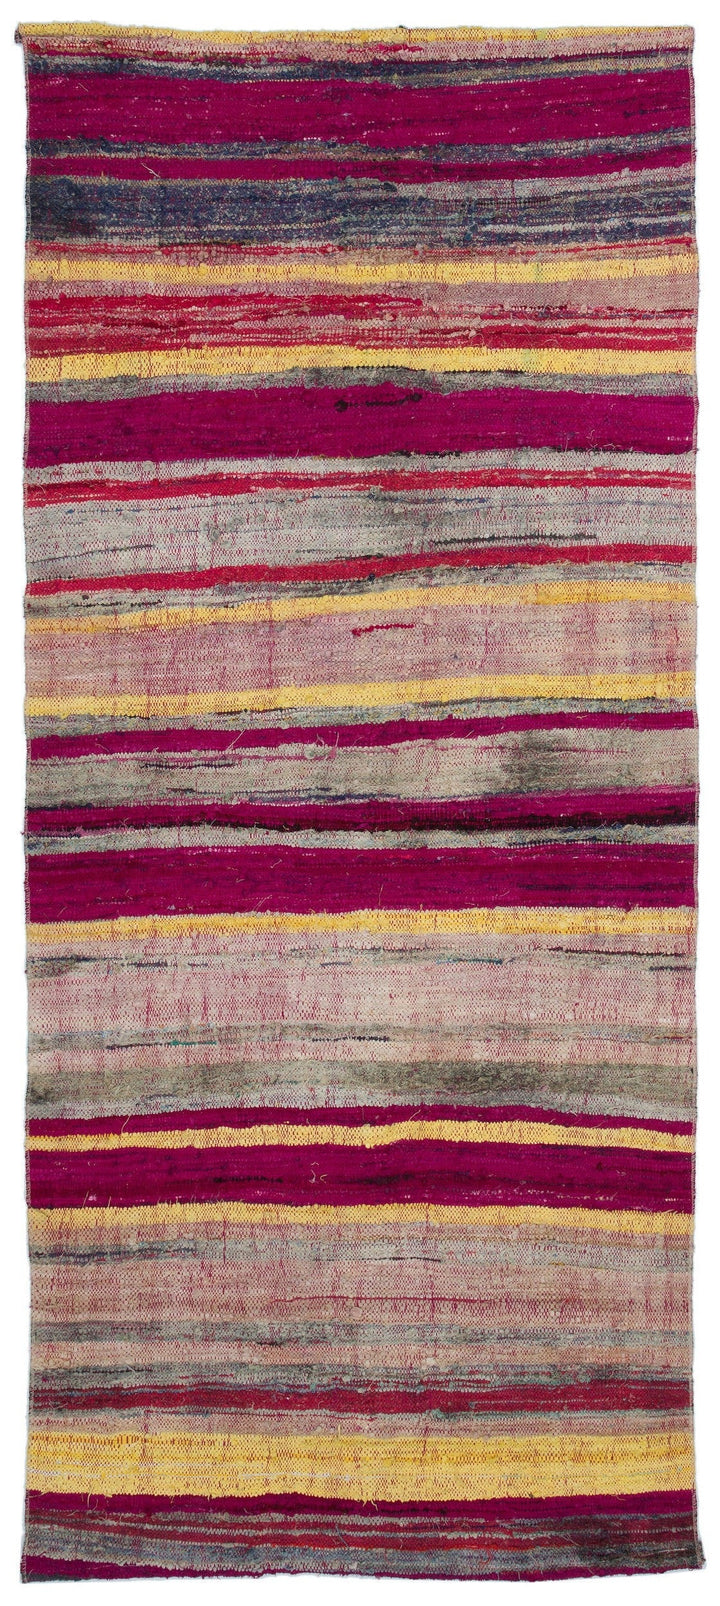 Cretan Pink Striped Wool Hand-Woven Carpet 113 x 255